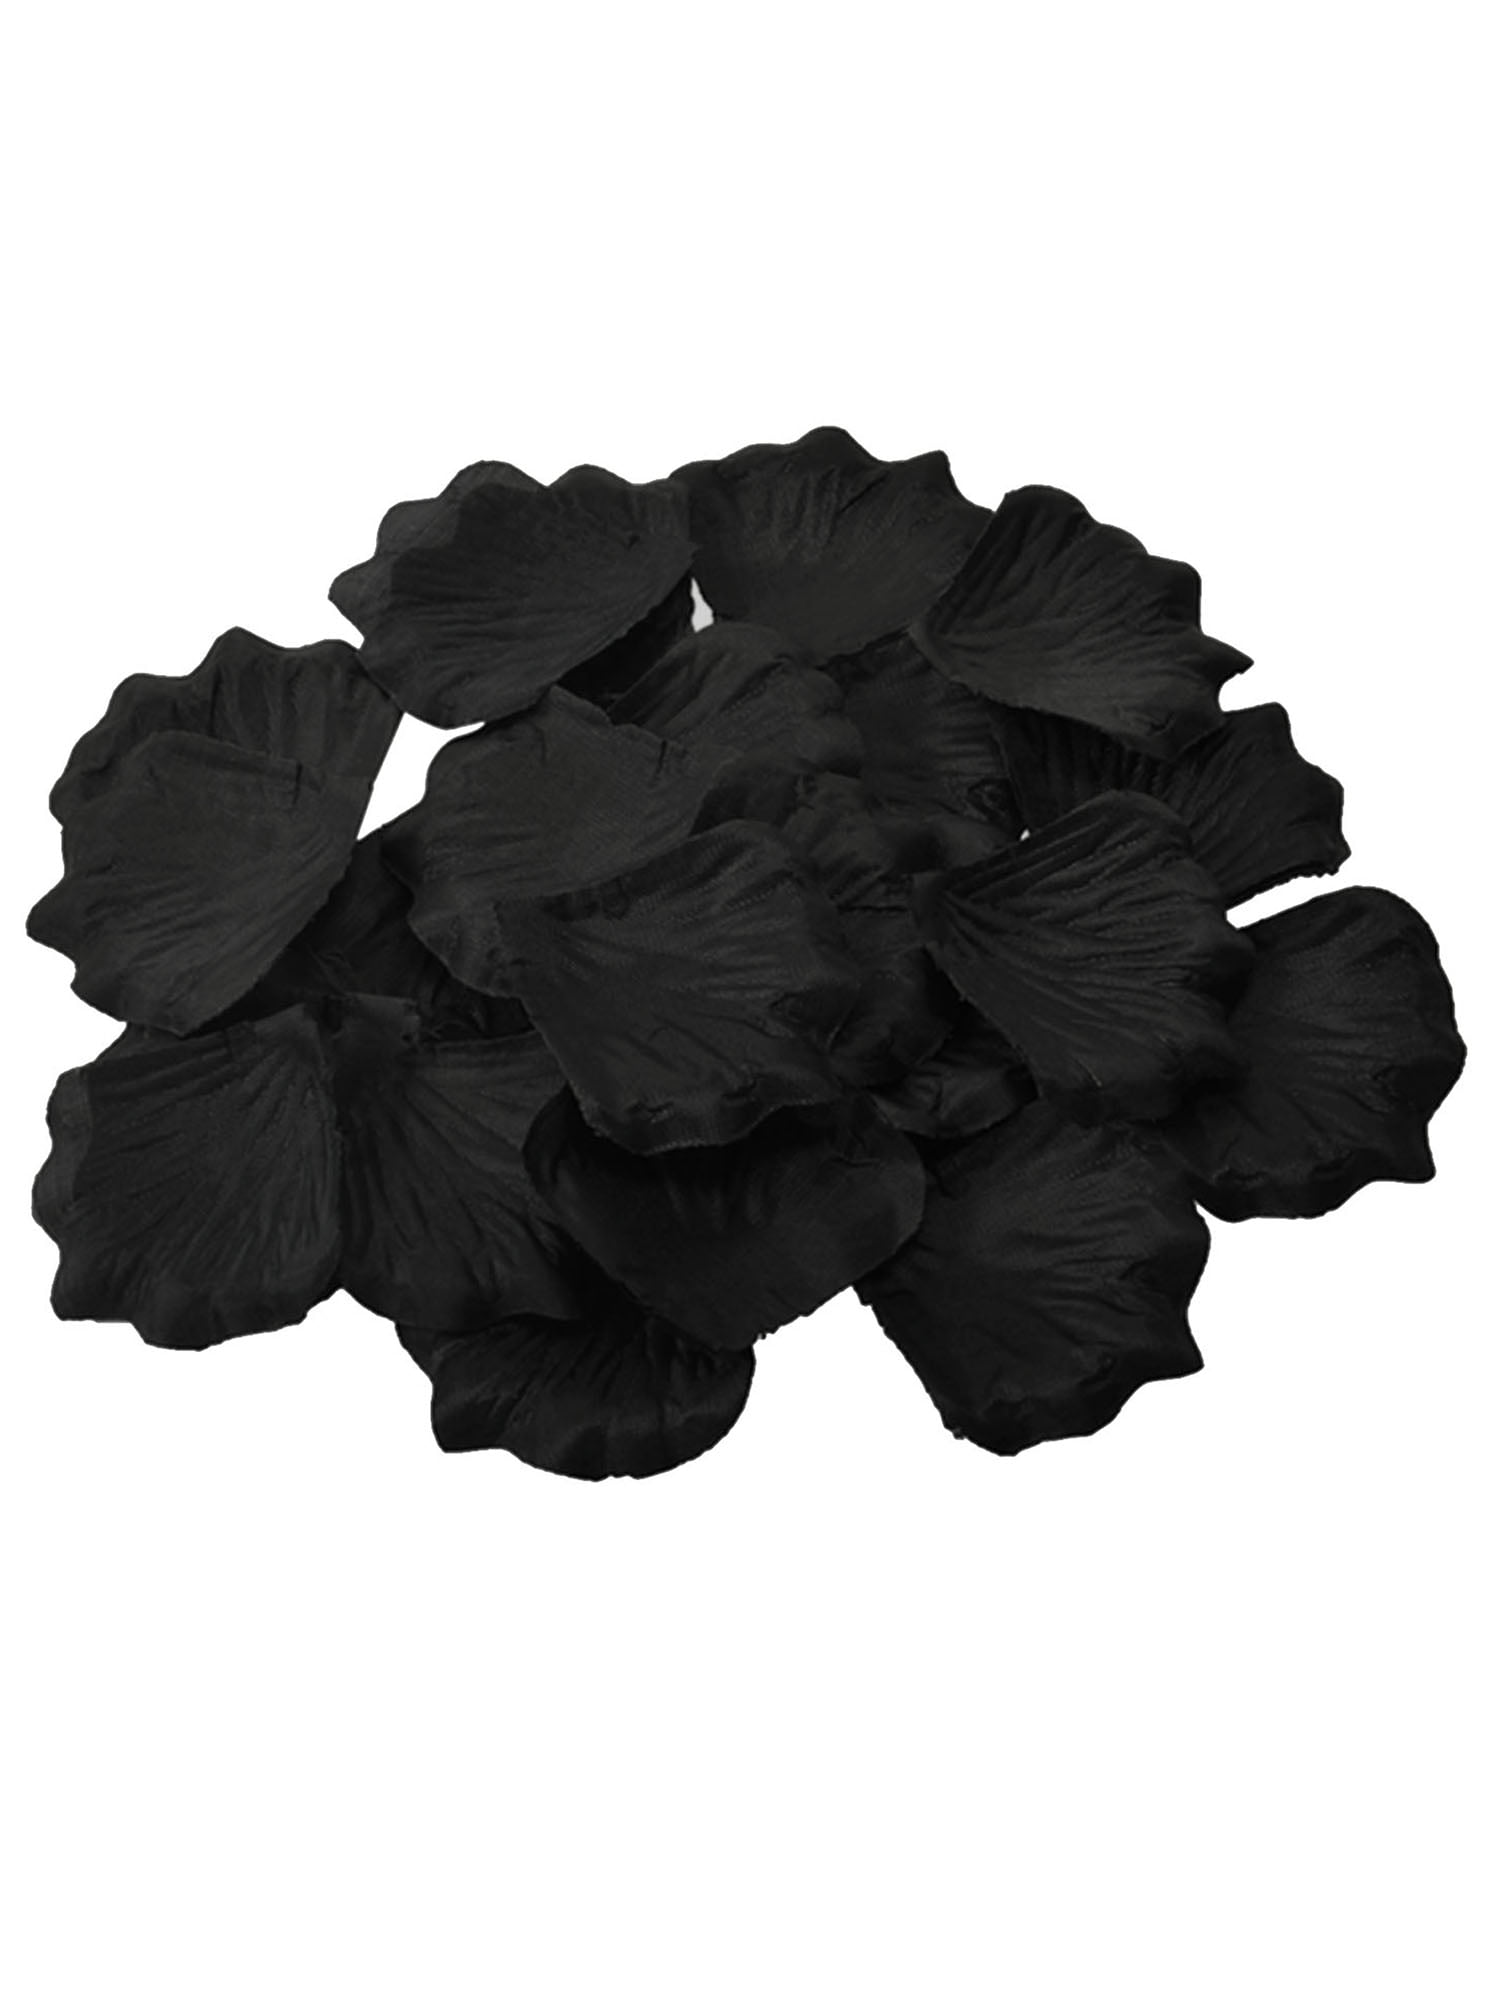 3000 Pieces Black Rose Petals, Artificial Rose Petals, Flower Petals, Black  Fake Petals, Rose Petals